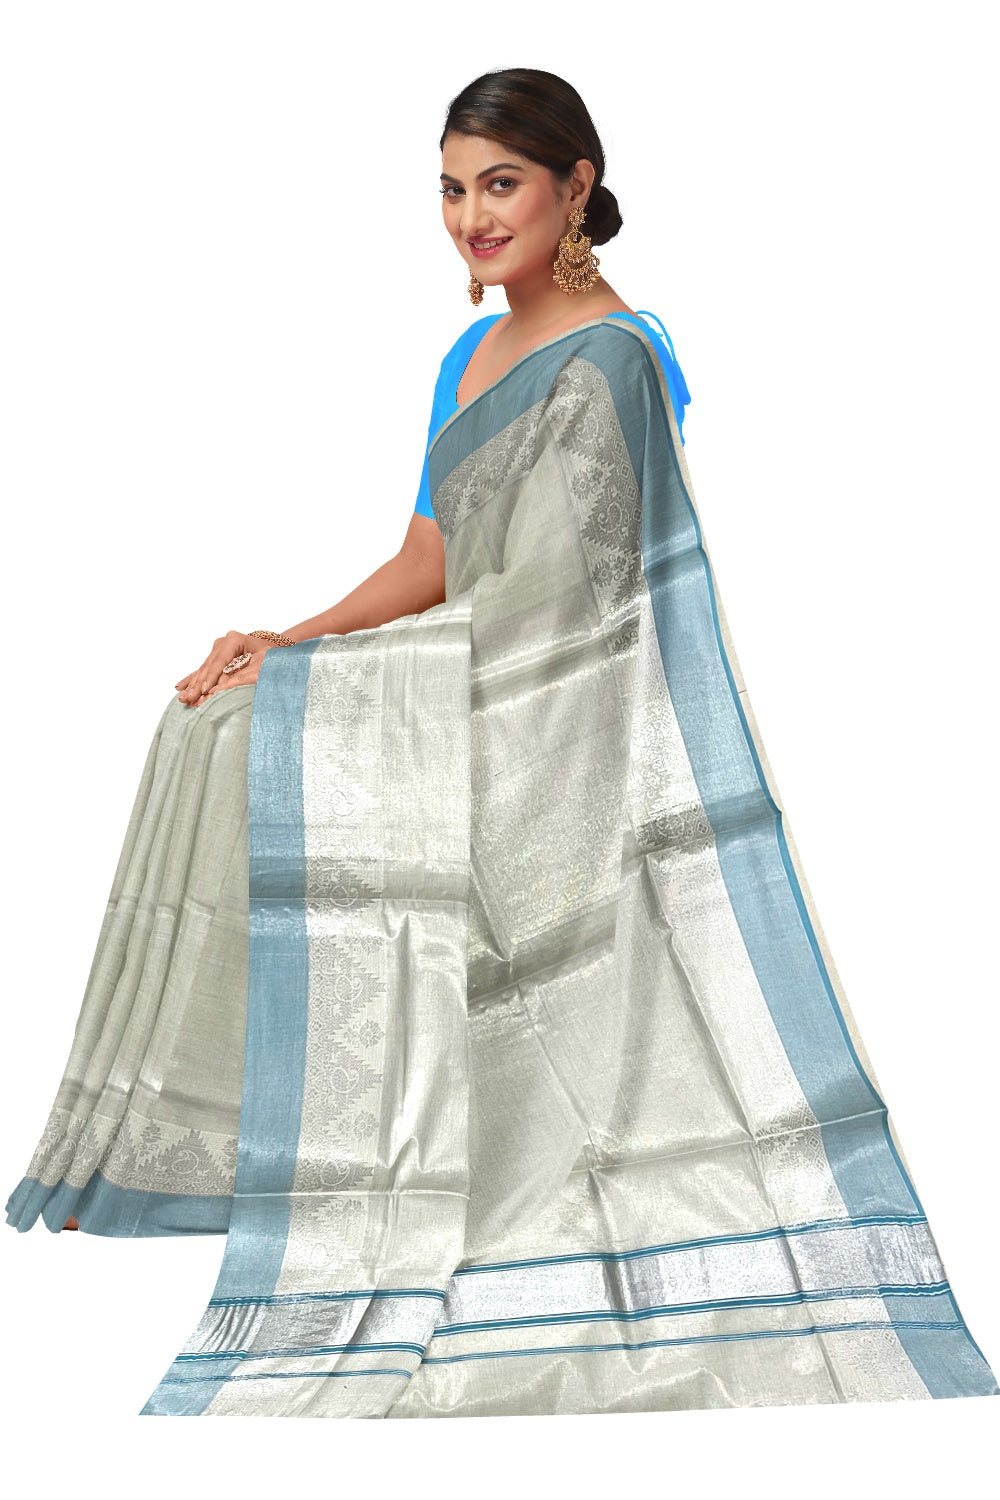 Kerala Silver Tissue Plain Saree with Sky Blue and Silver Border